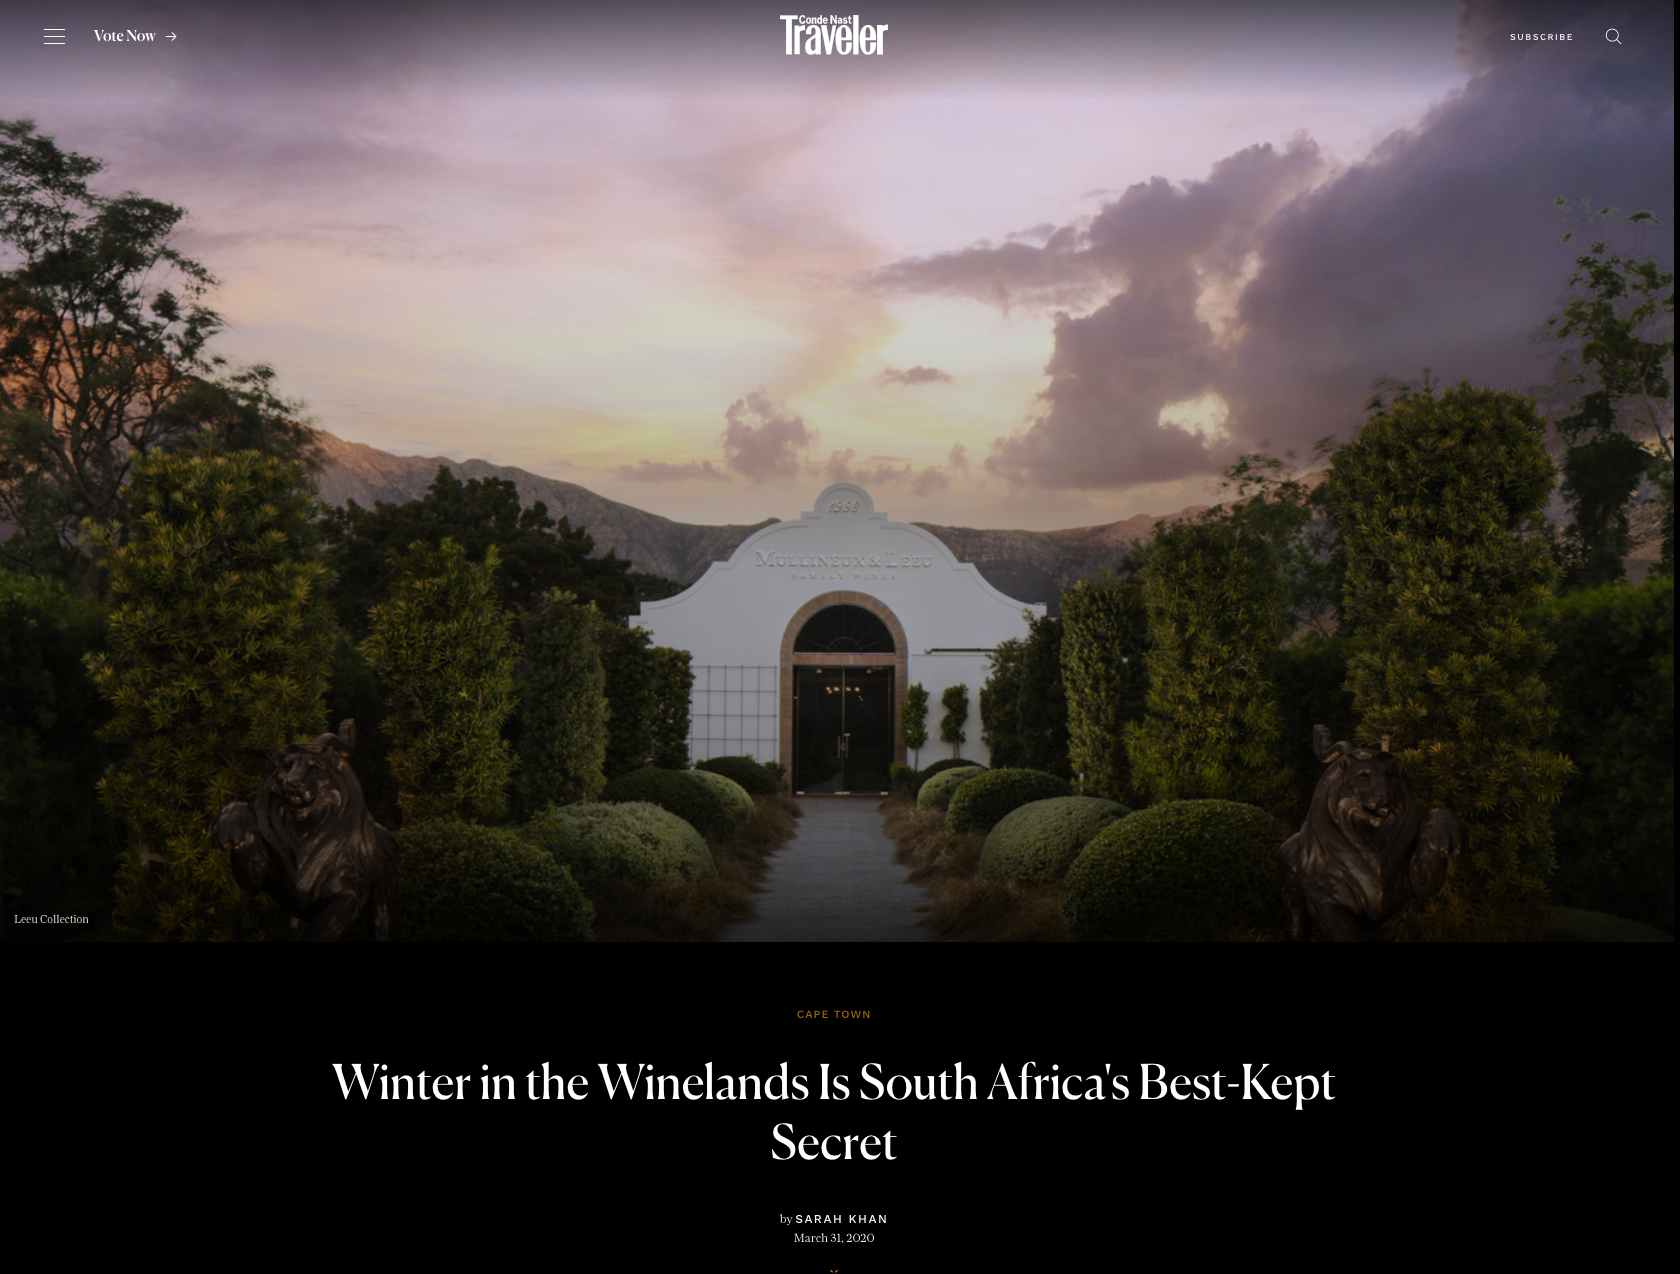 CondÃ© Nast Traveler: Winter in the Winelands is South Africa’s Best-Kept Secret